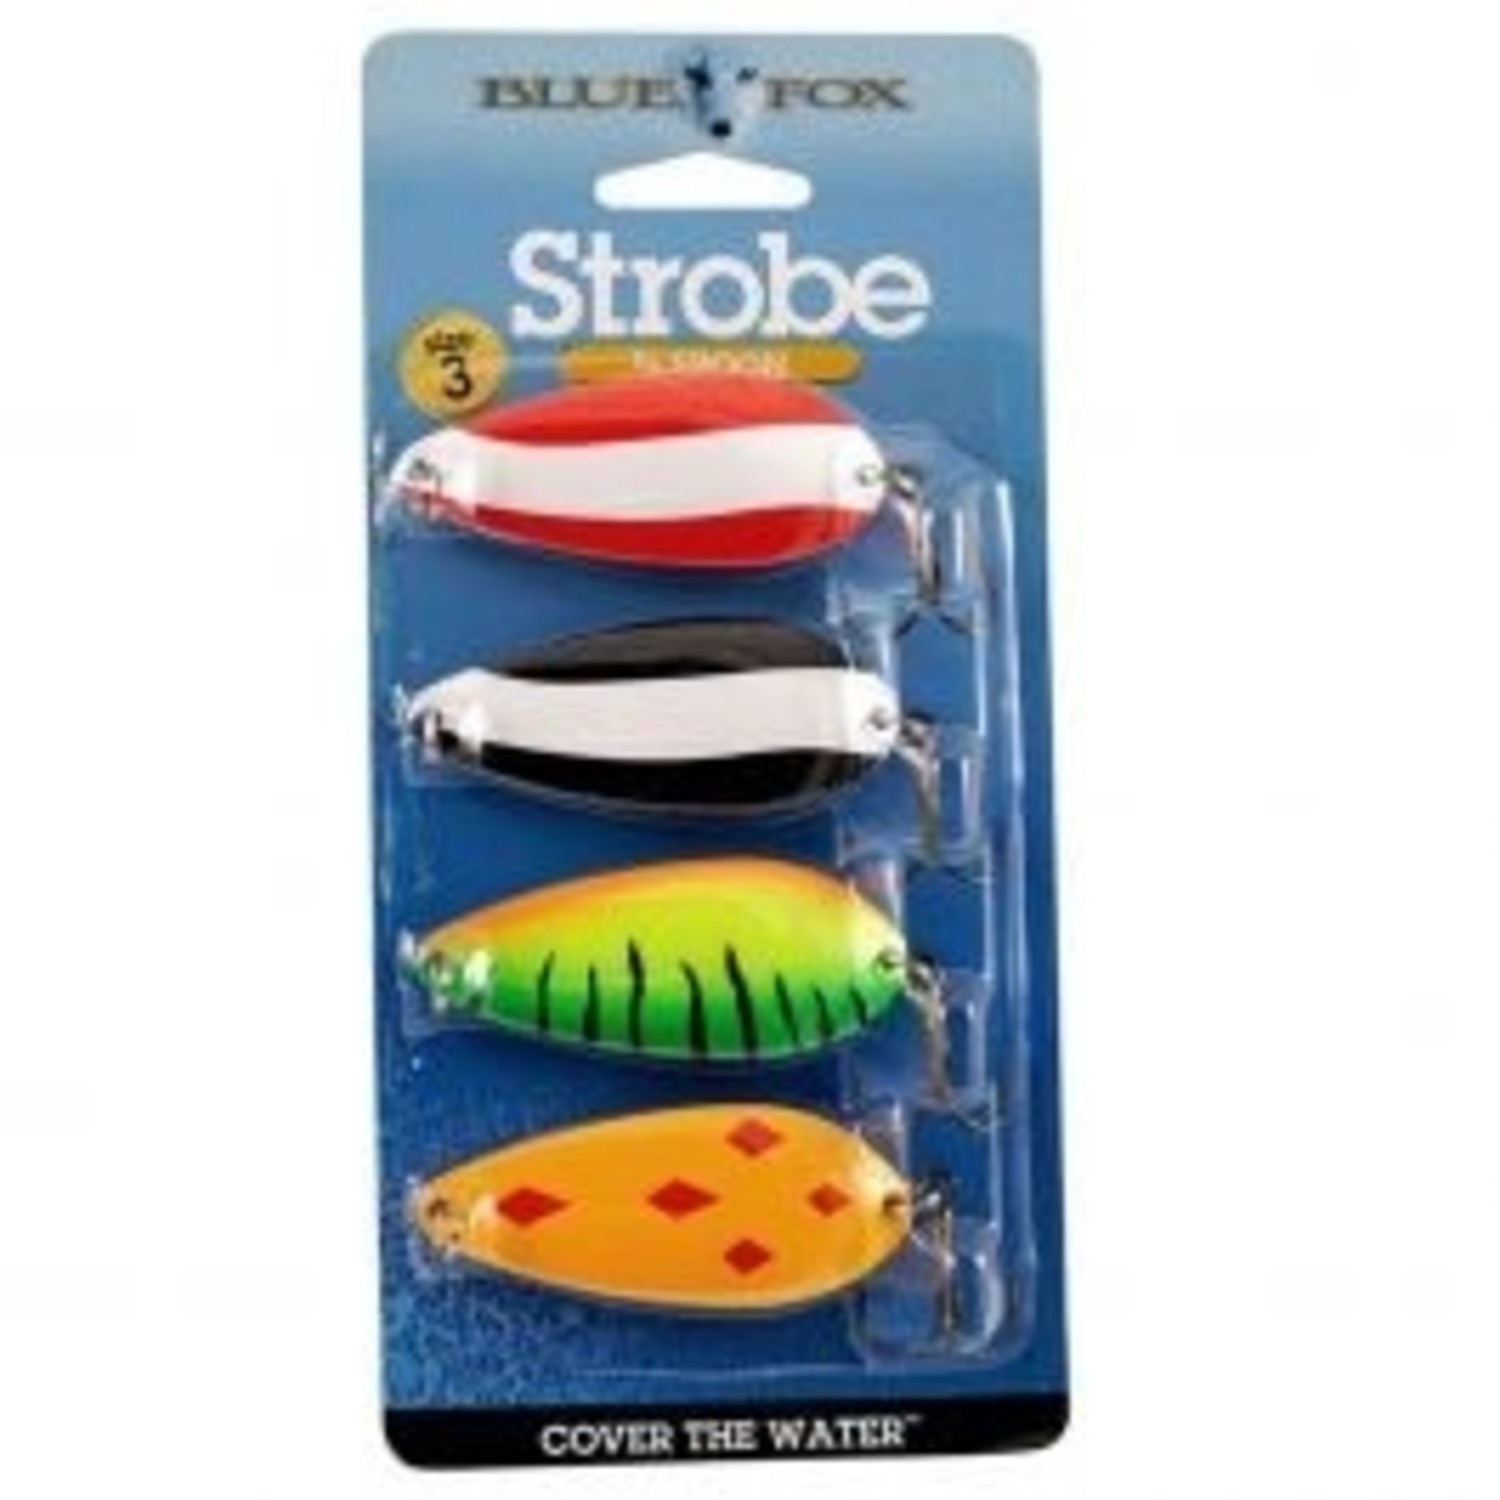 strobe spoon kit 5/8 4pk - OutfitterSSM